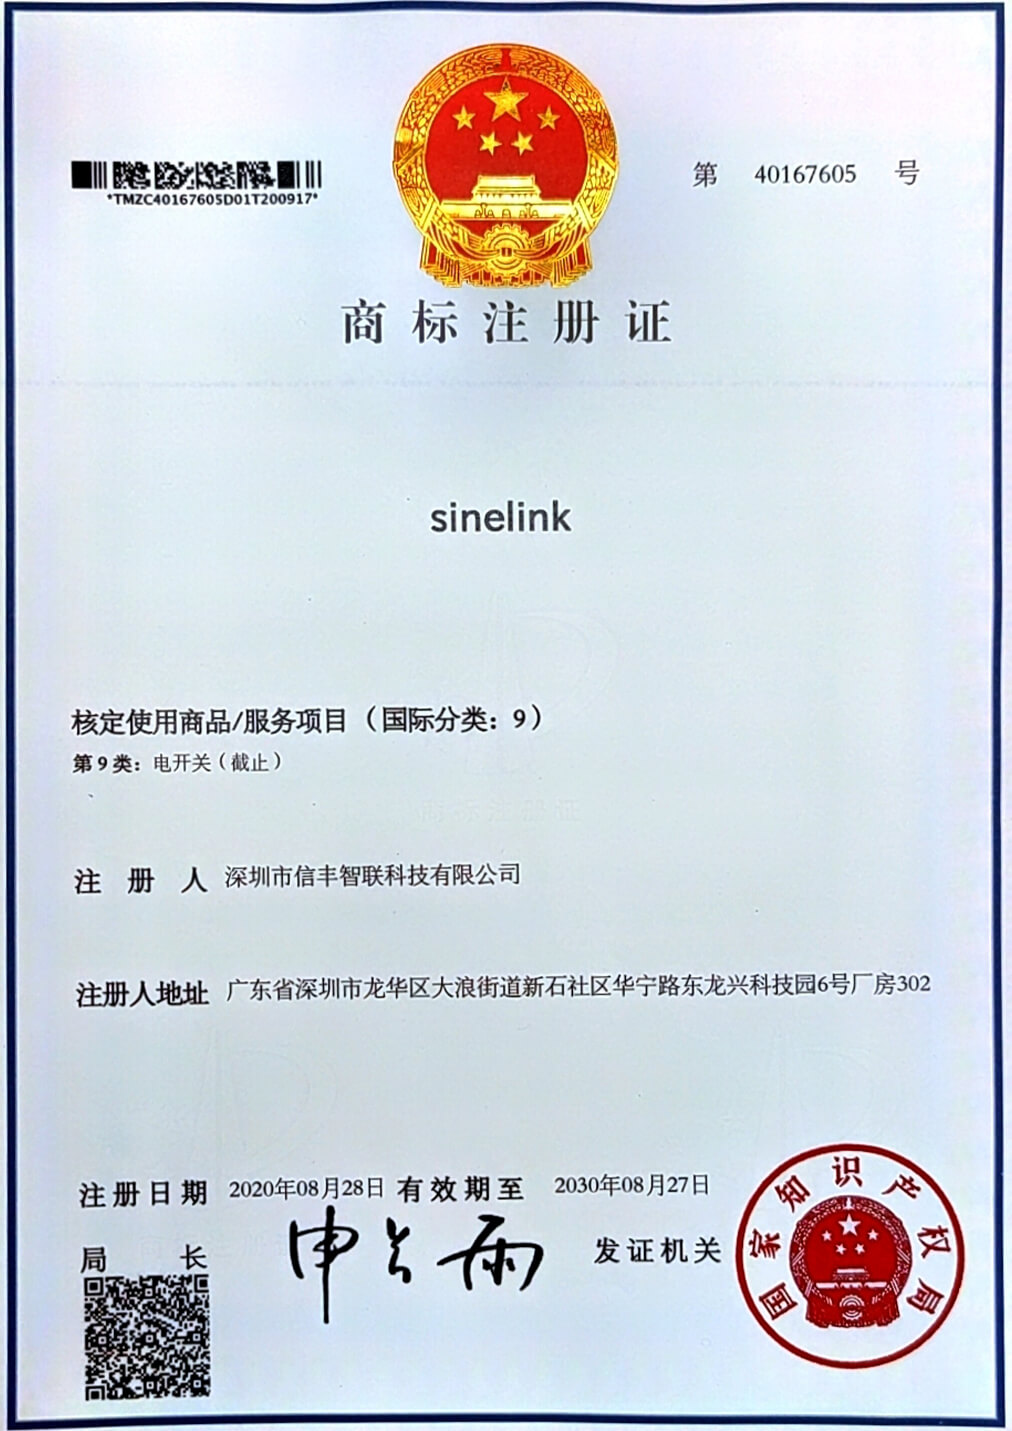 Trademark Registration Certificate (1)